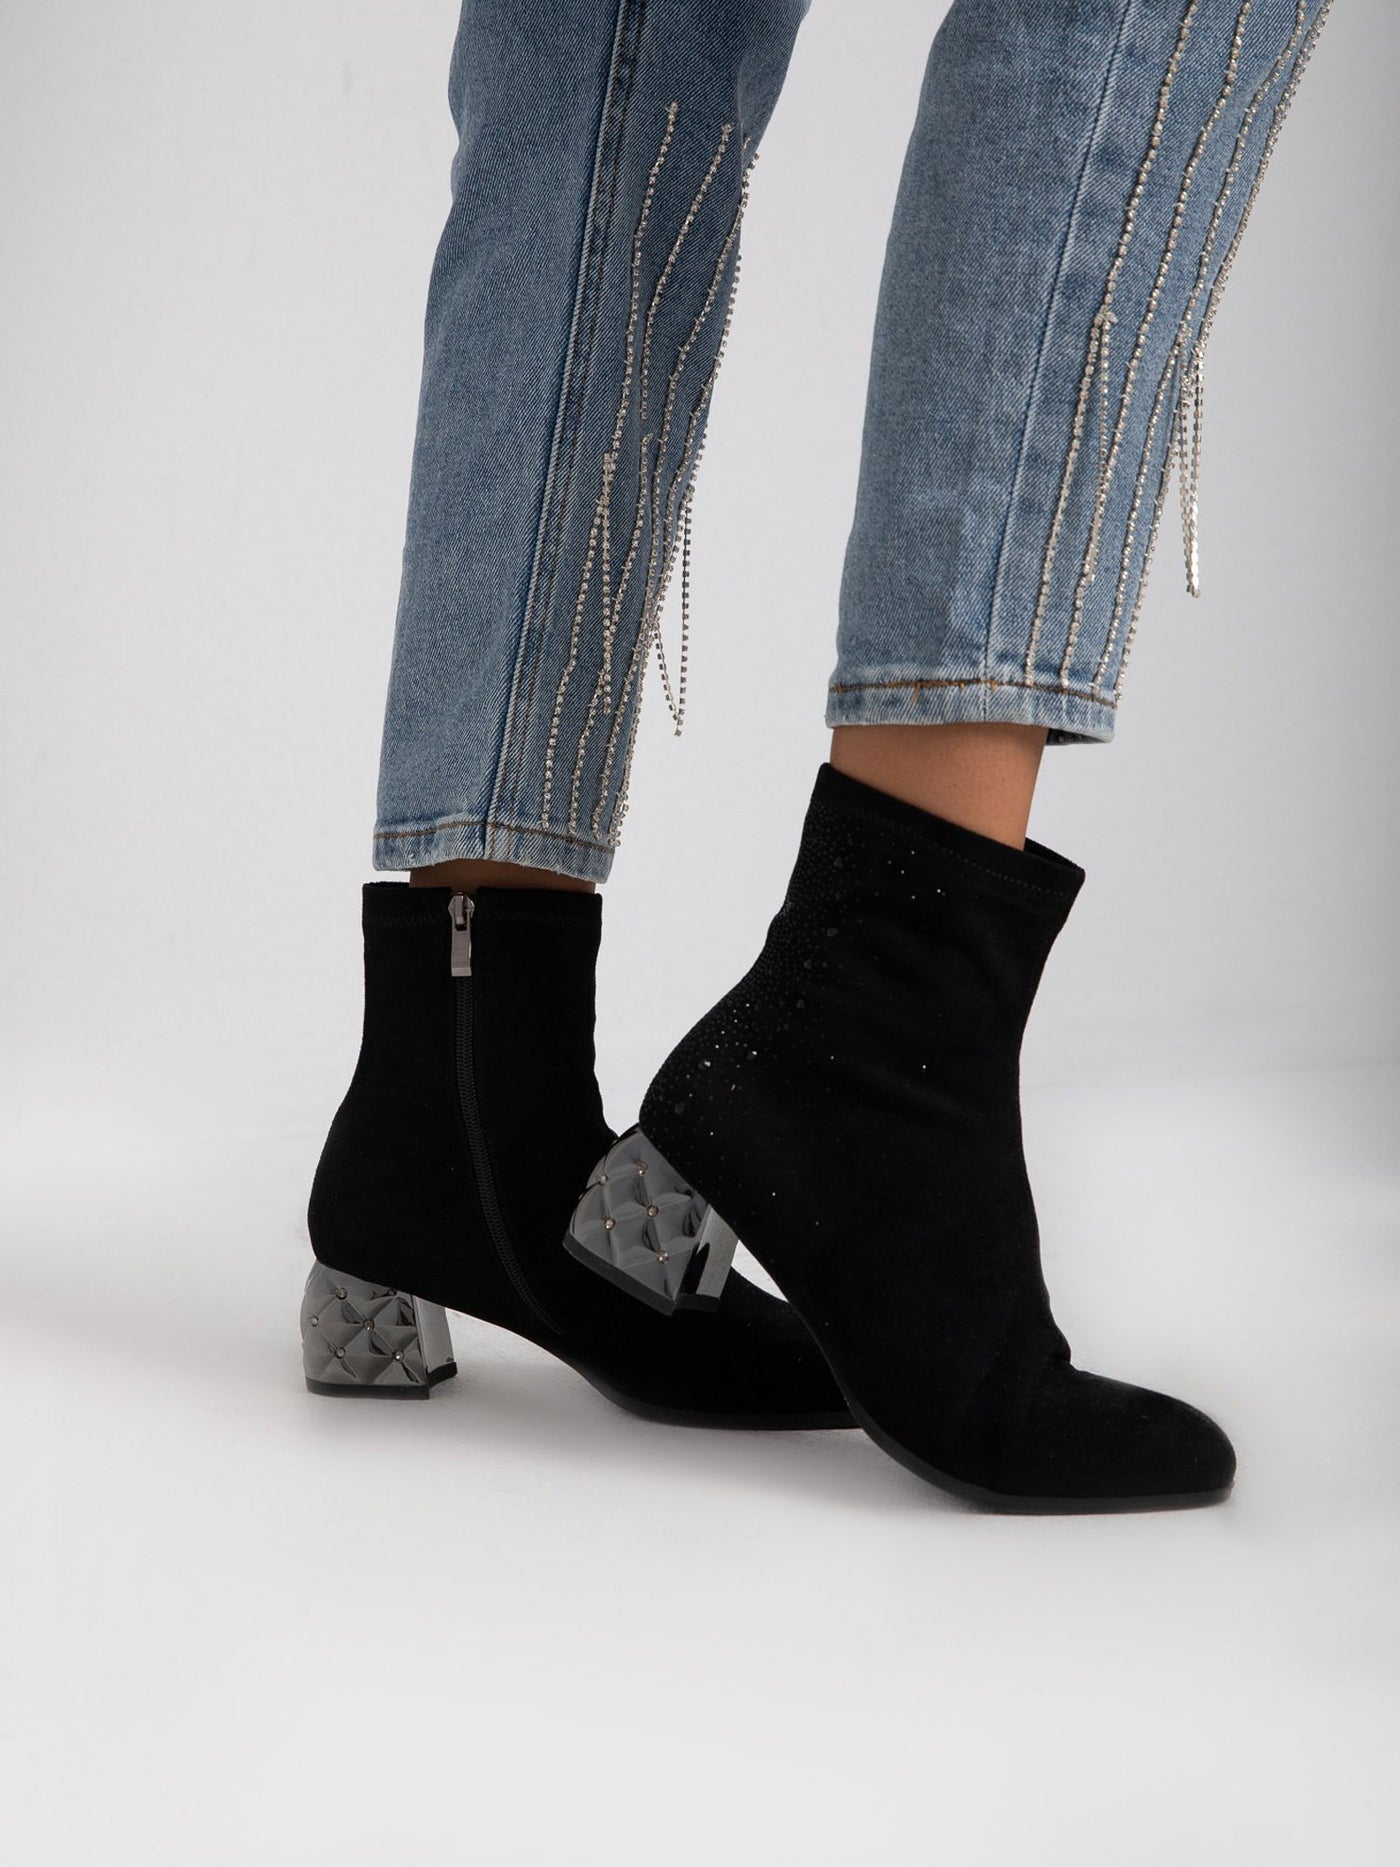 Boots - Studded Heels